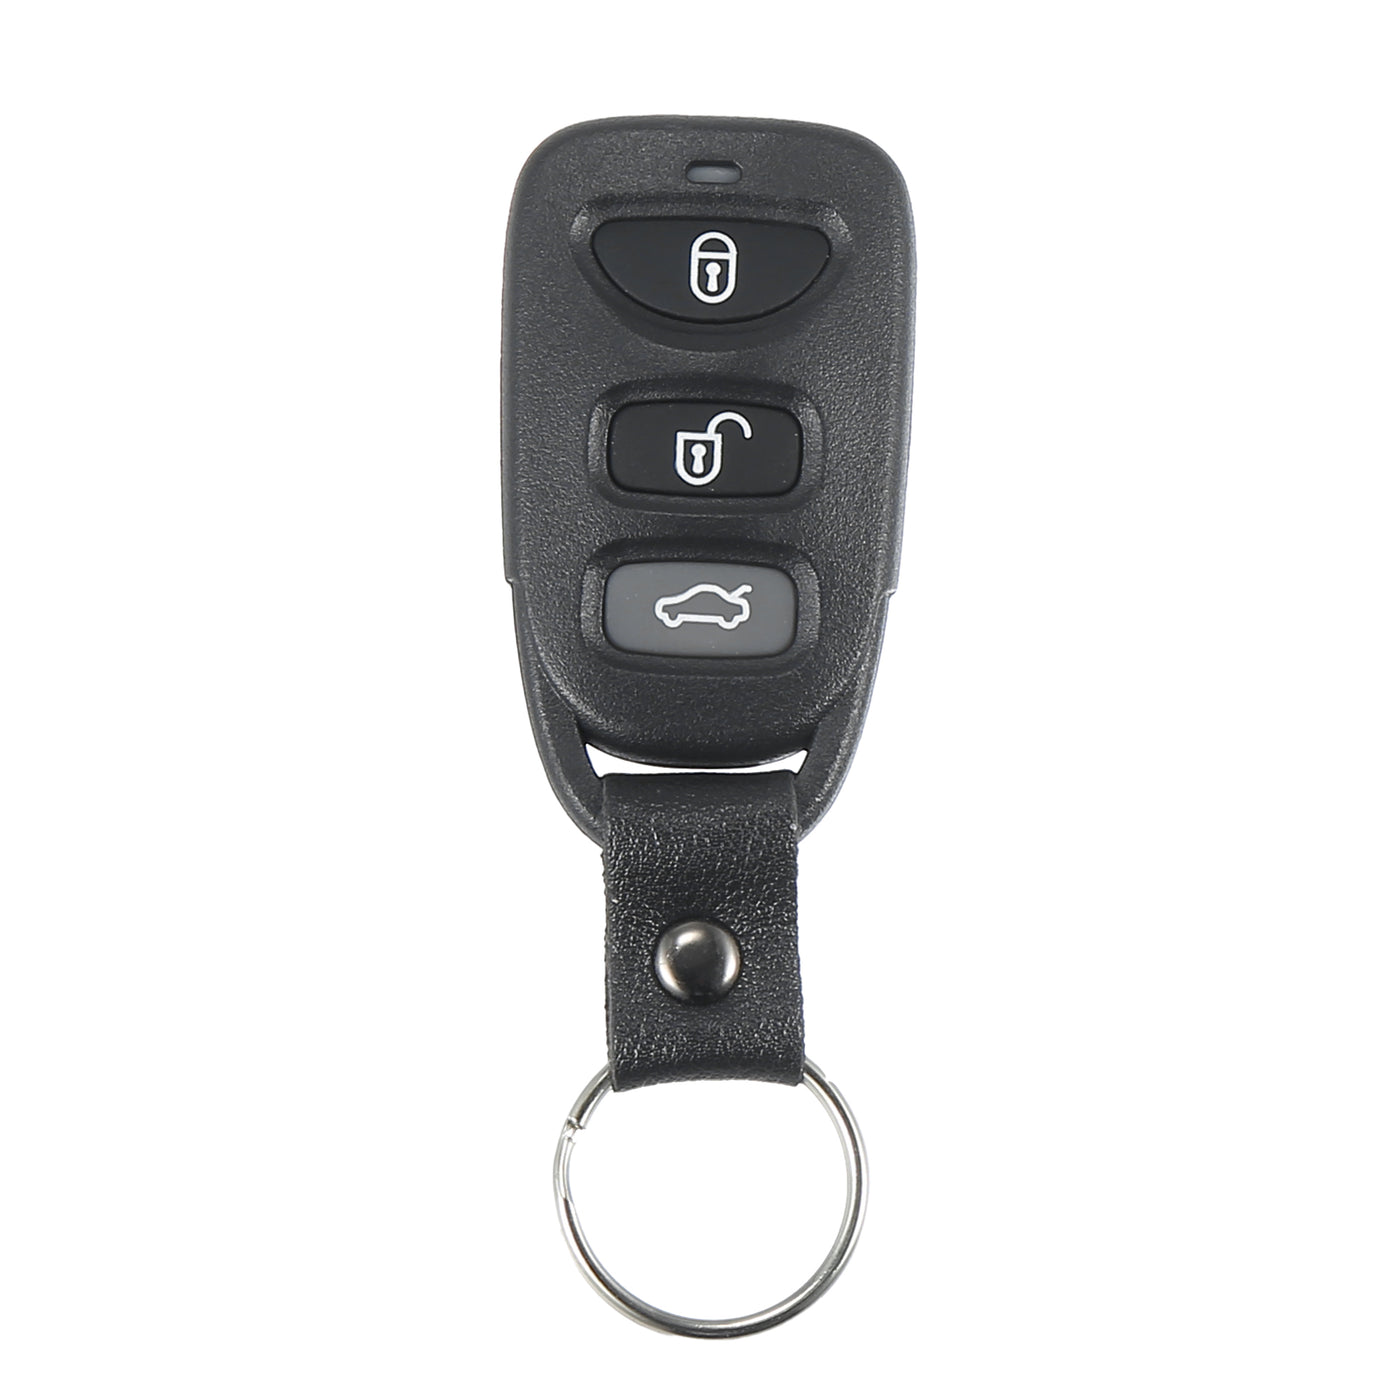 X AUTOHAUX 4 Button Car Keyless Entry Remote Control Key Fob Proximity Smart Fob PINHA-T008 for Kia Forte 2010-2013 315MHz